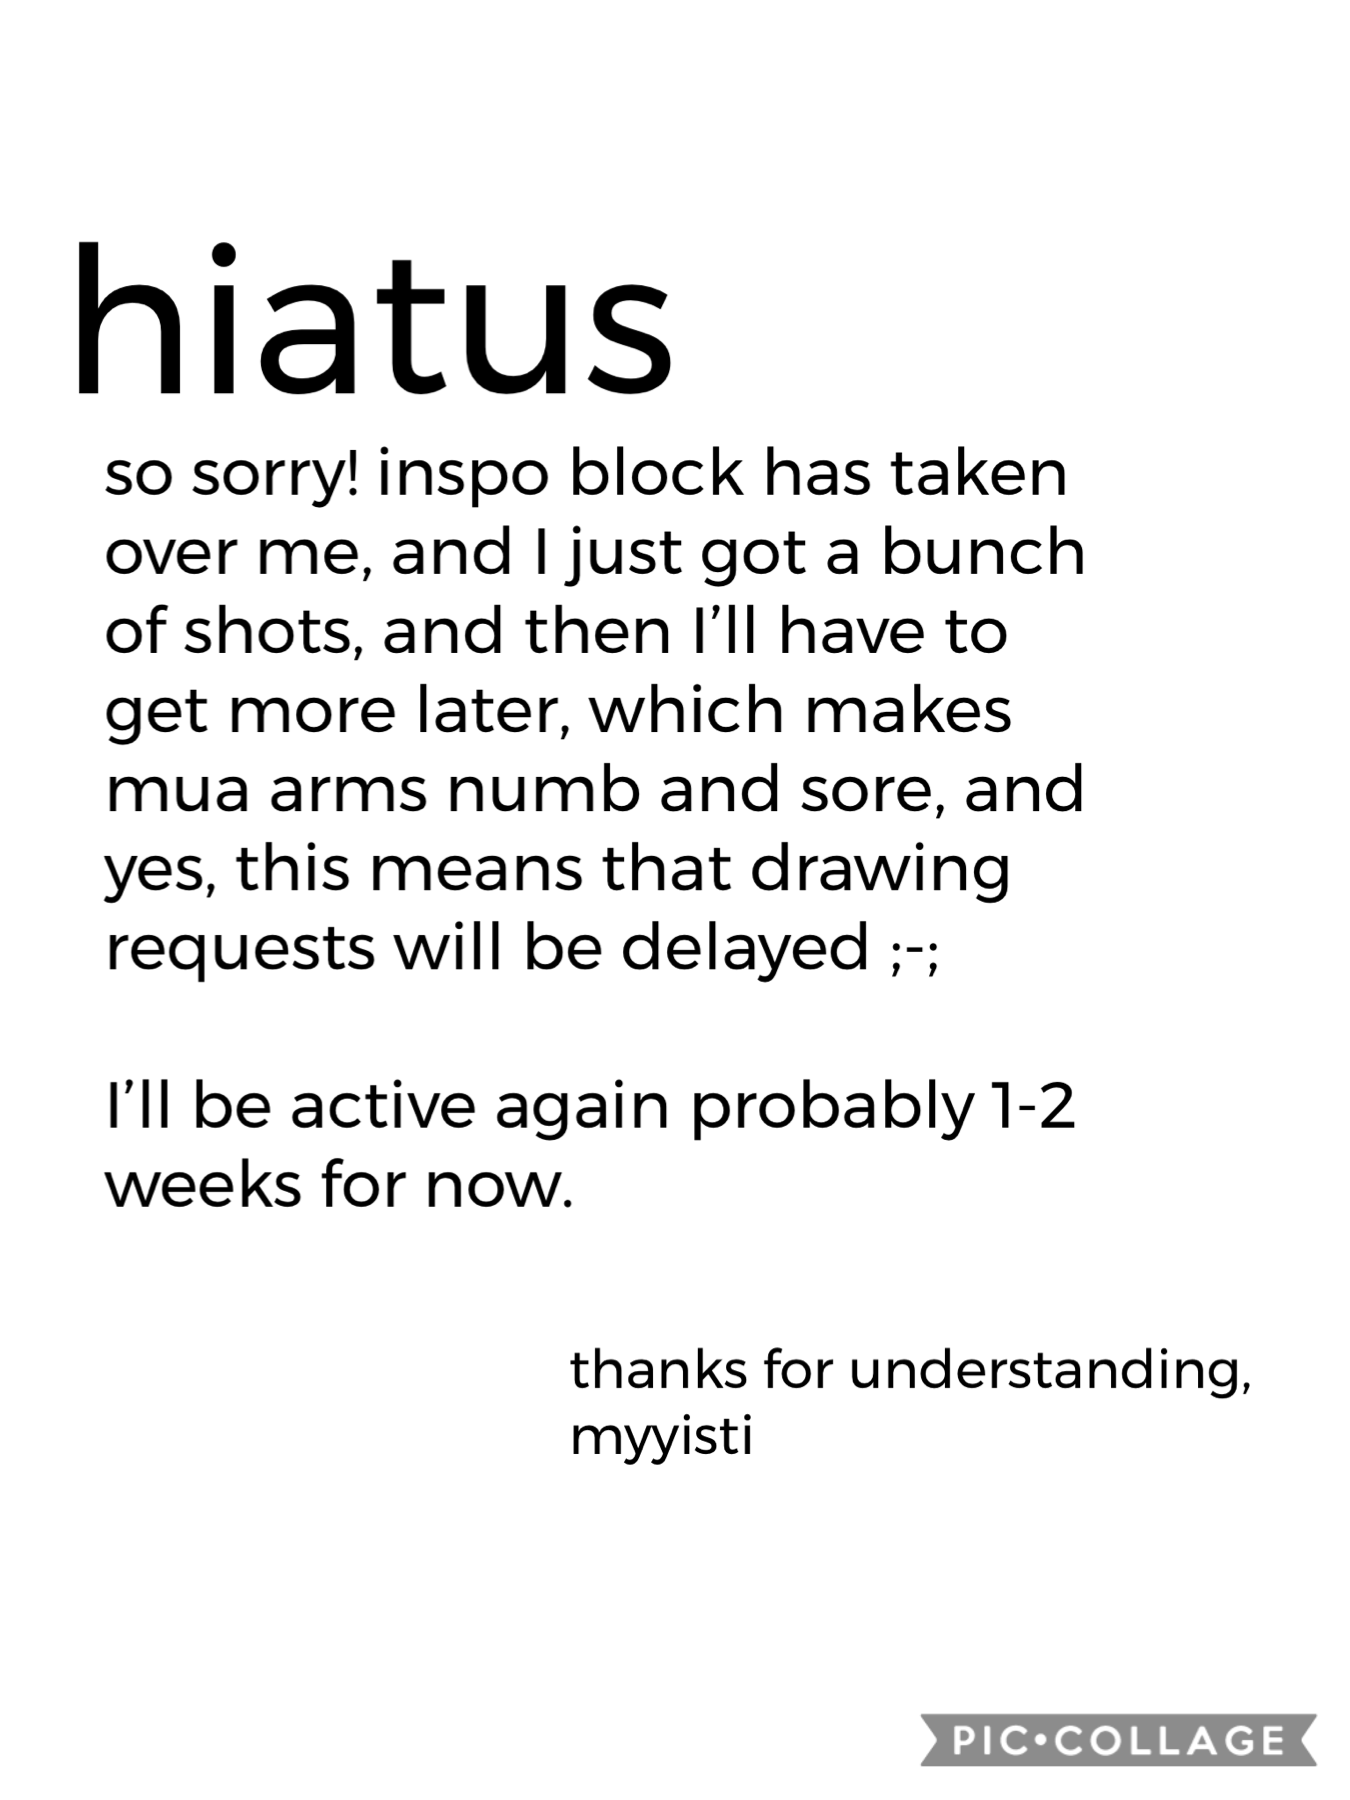 hiatus, so sorry!